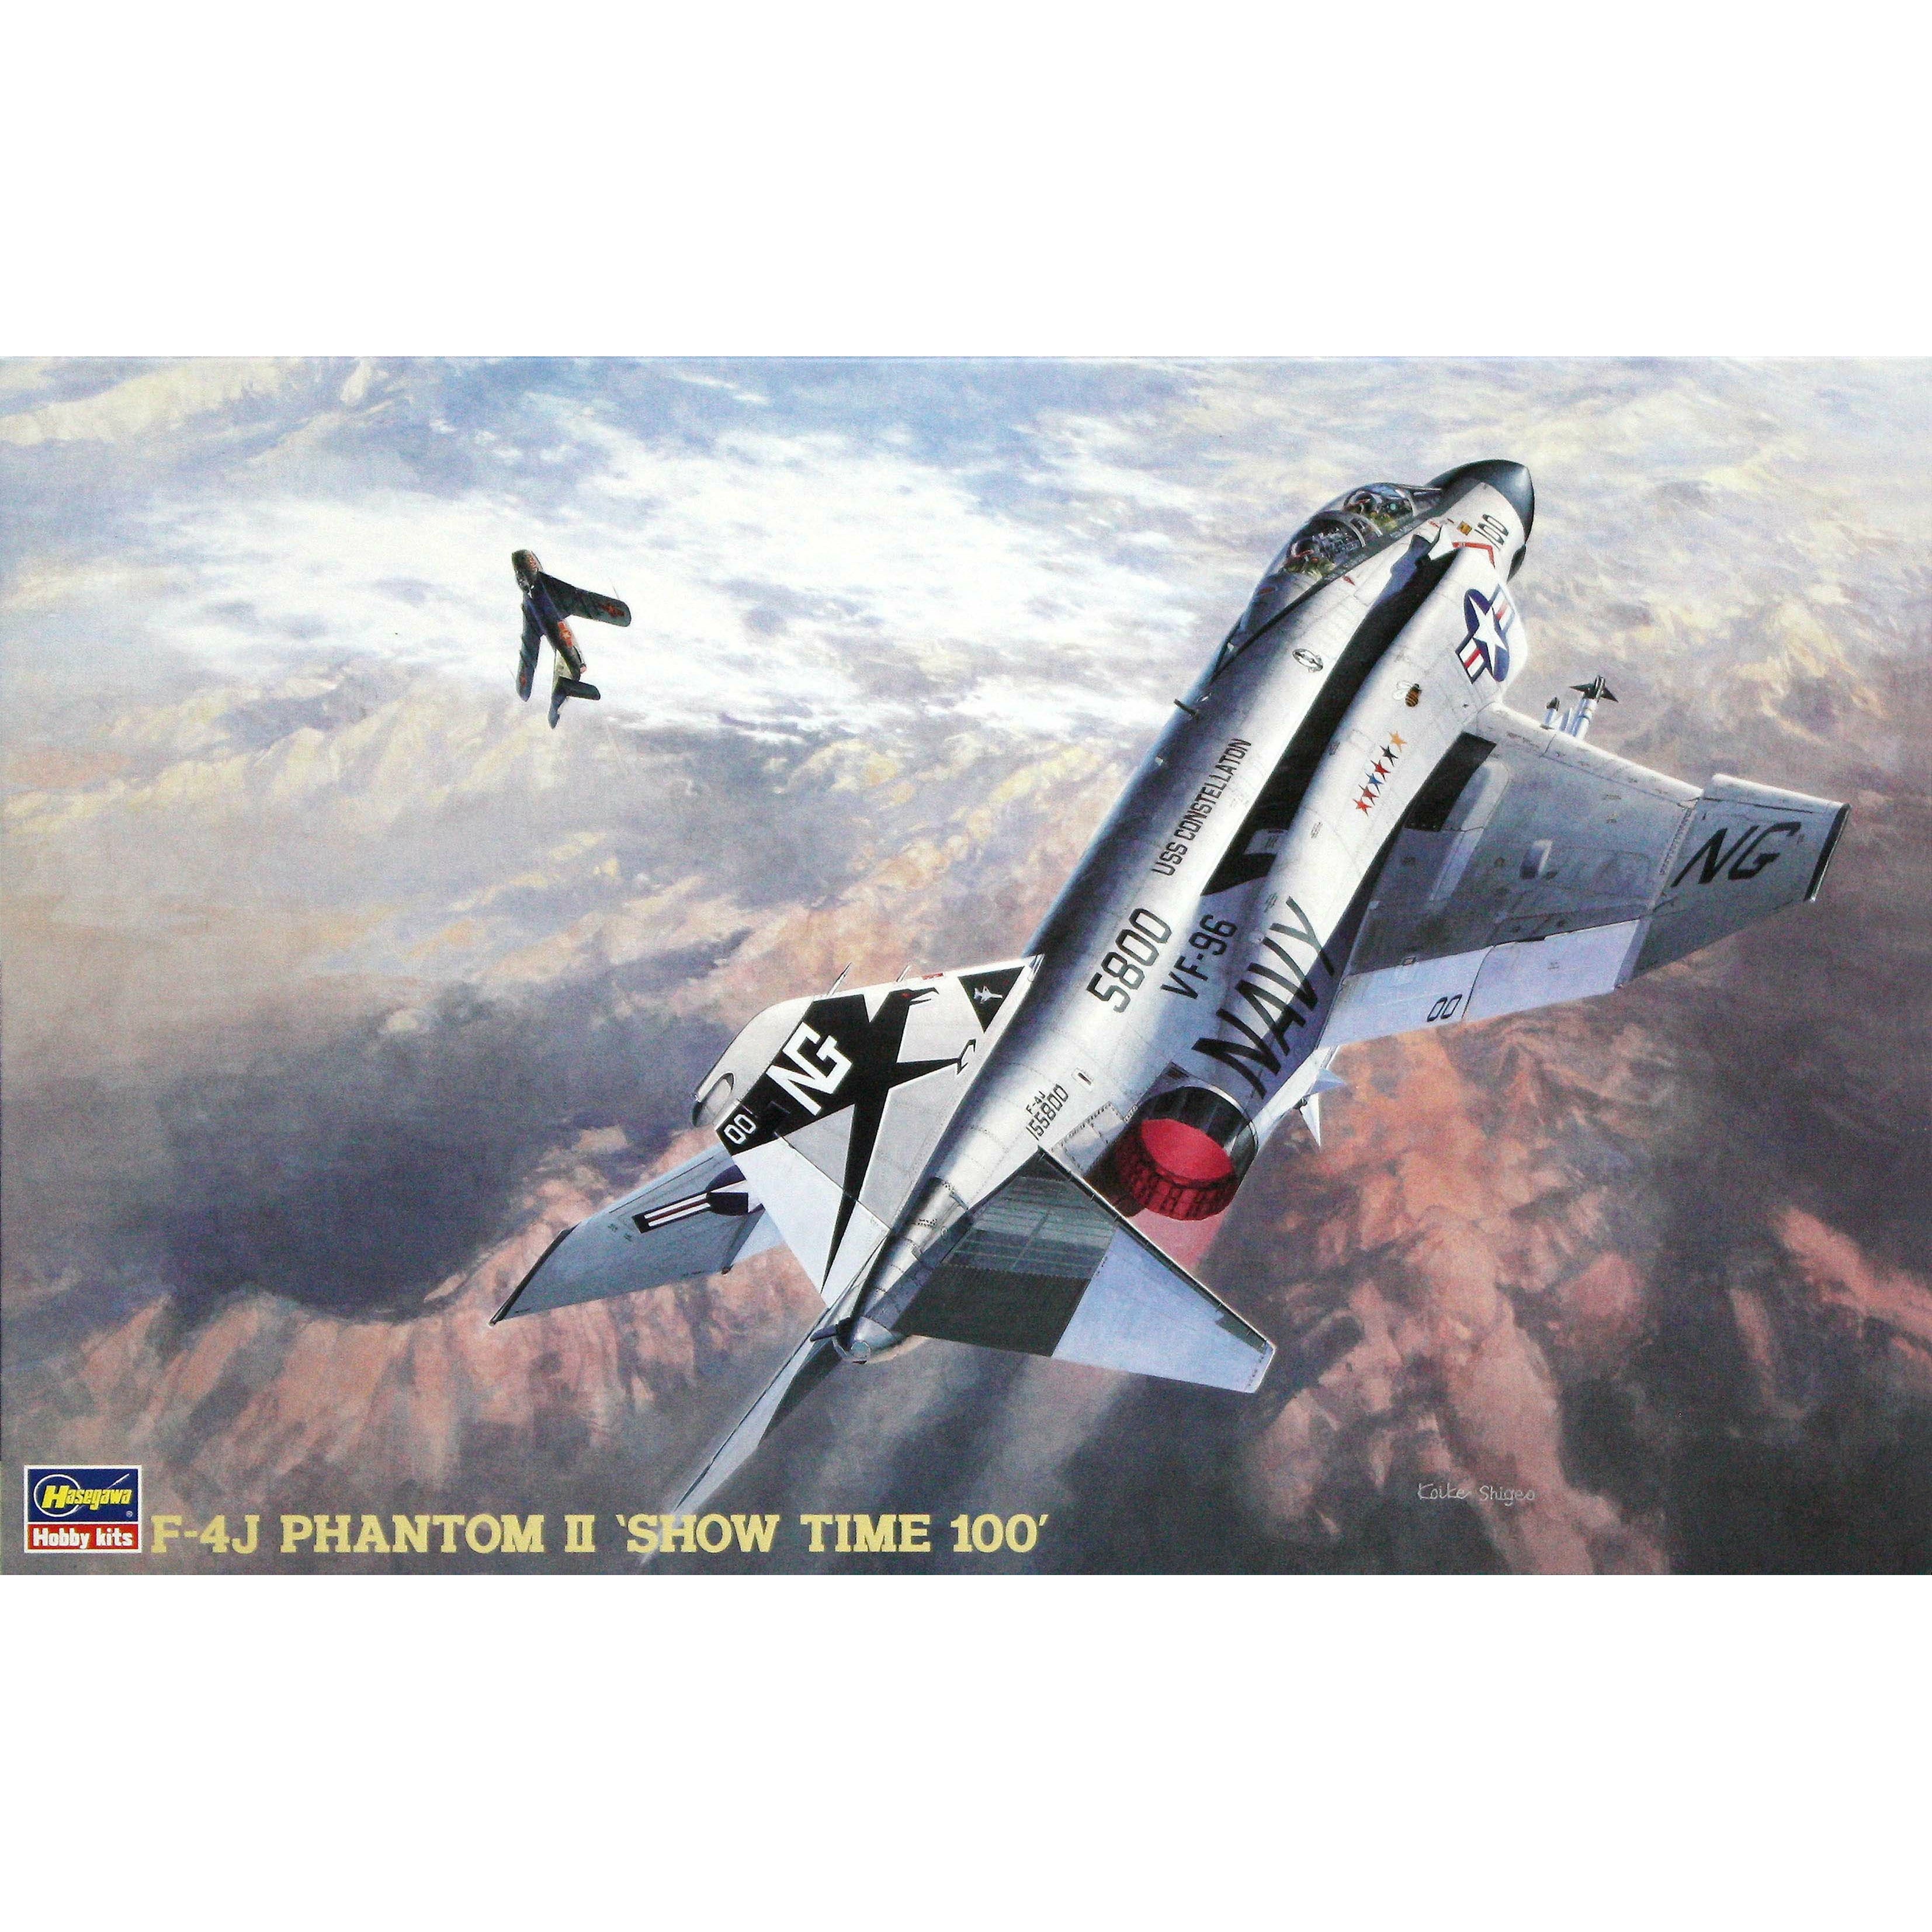 F-4J Phantom II 'Show Time 100' 1/48 #07206 by Hasegawa